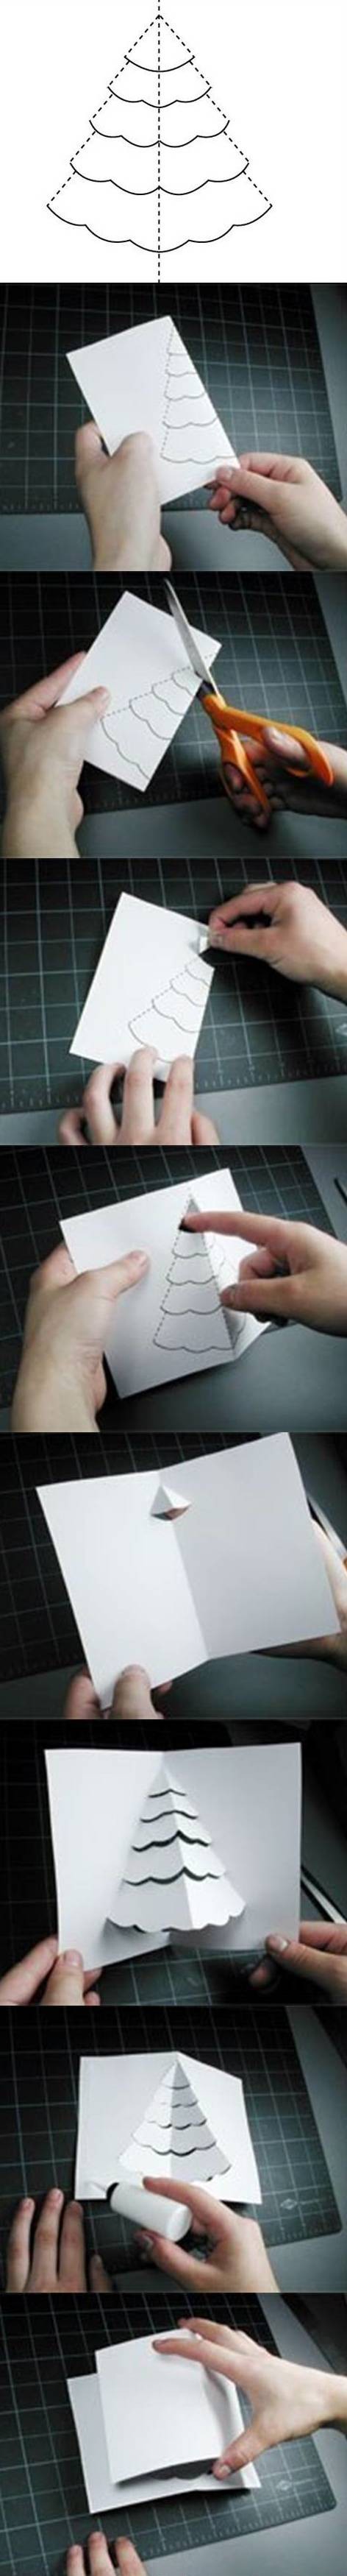 3D kerstboomkerstkaart - stappenplan